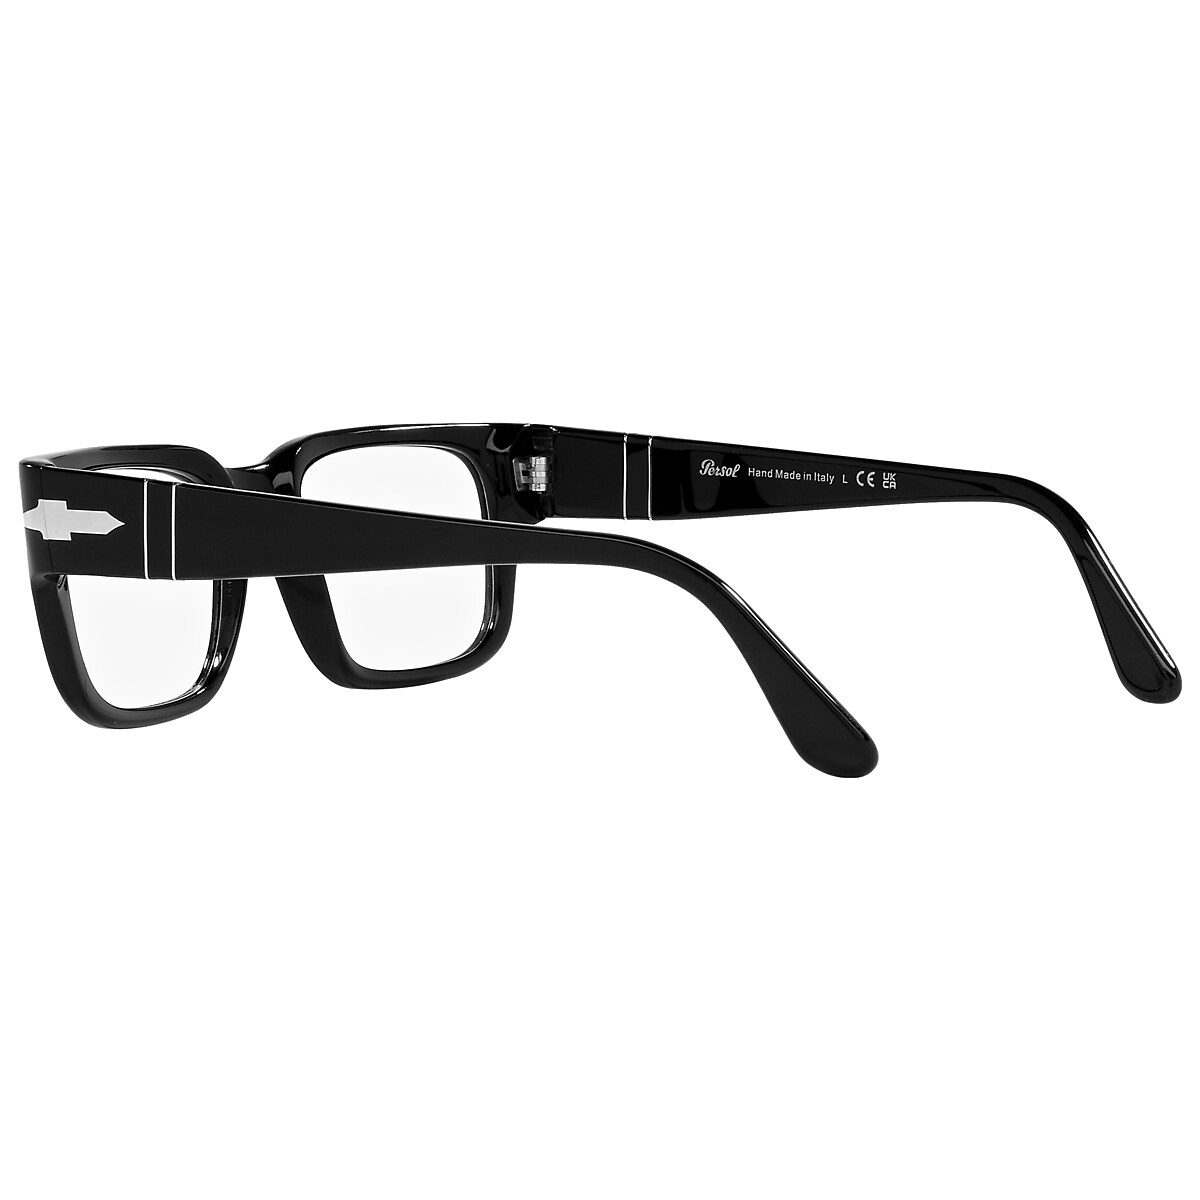 Persol Black Eyeglasses, ®